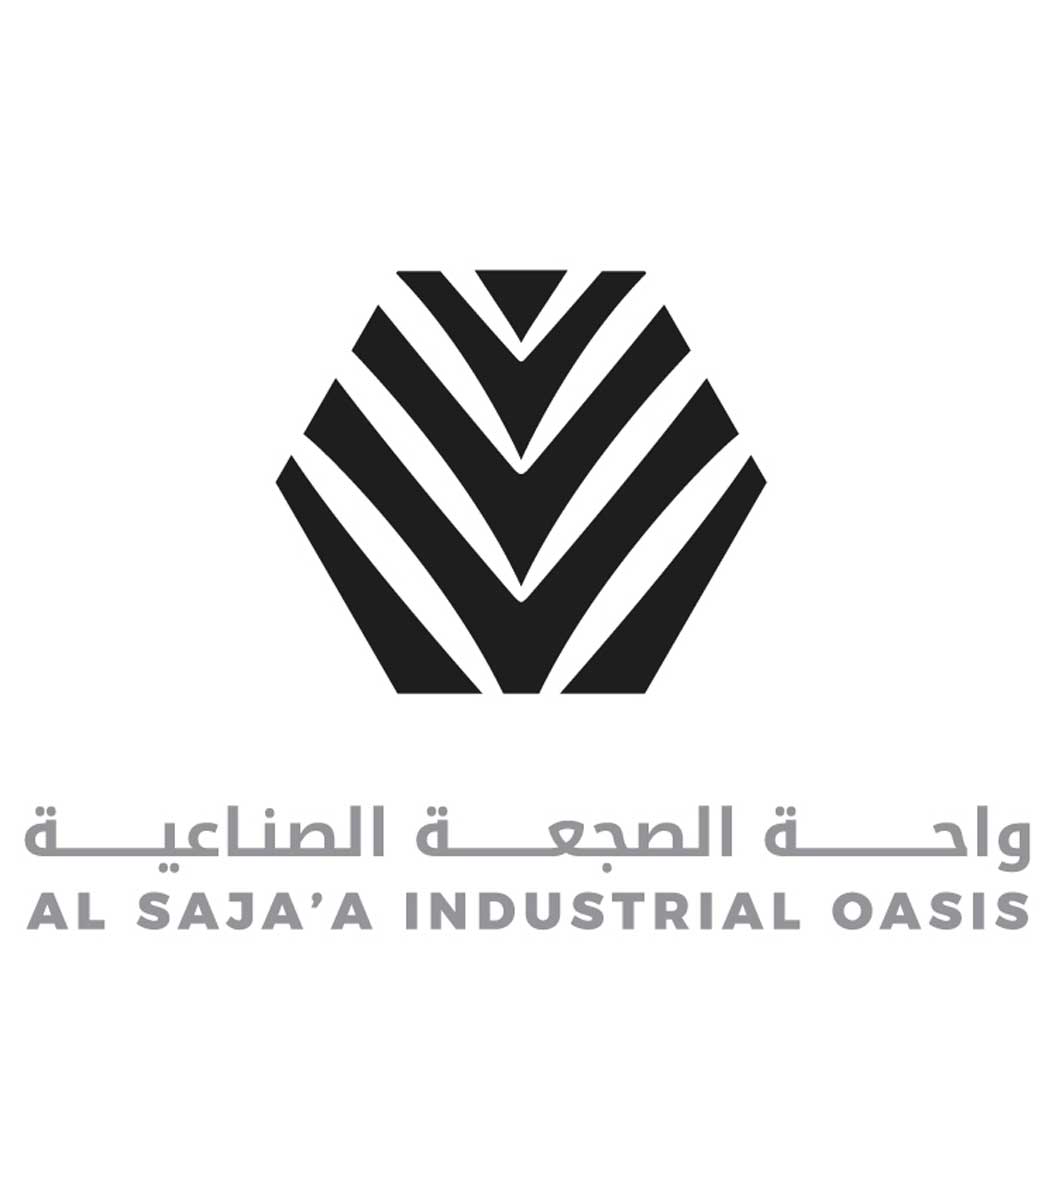 Al Sajaa Industrial Oasis